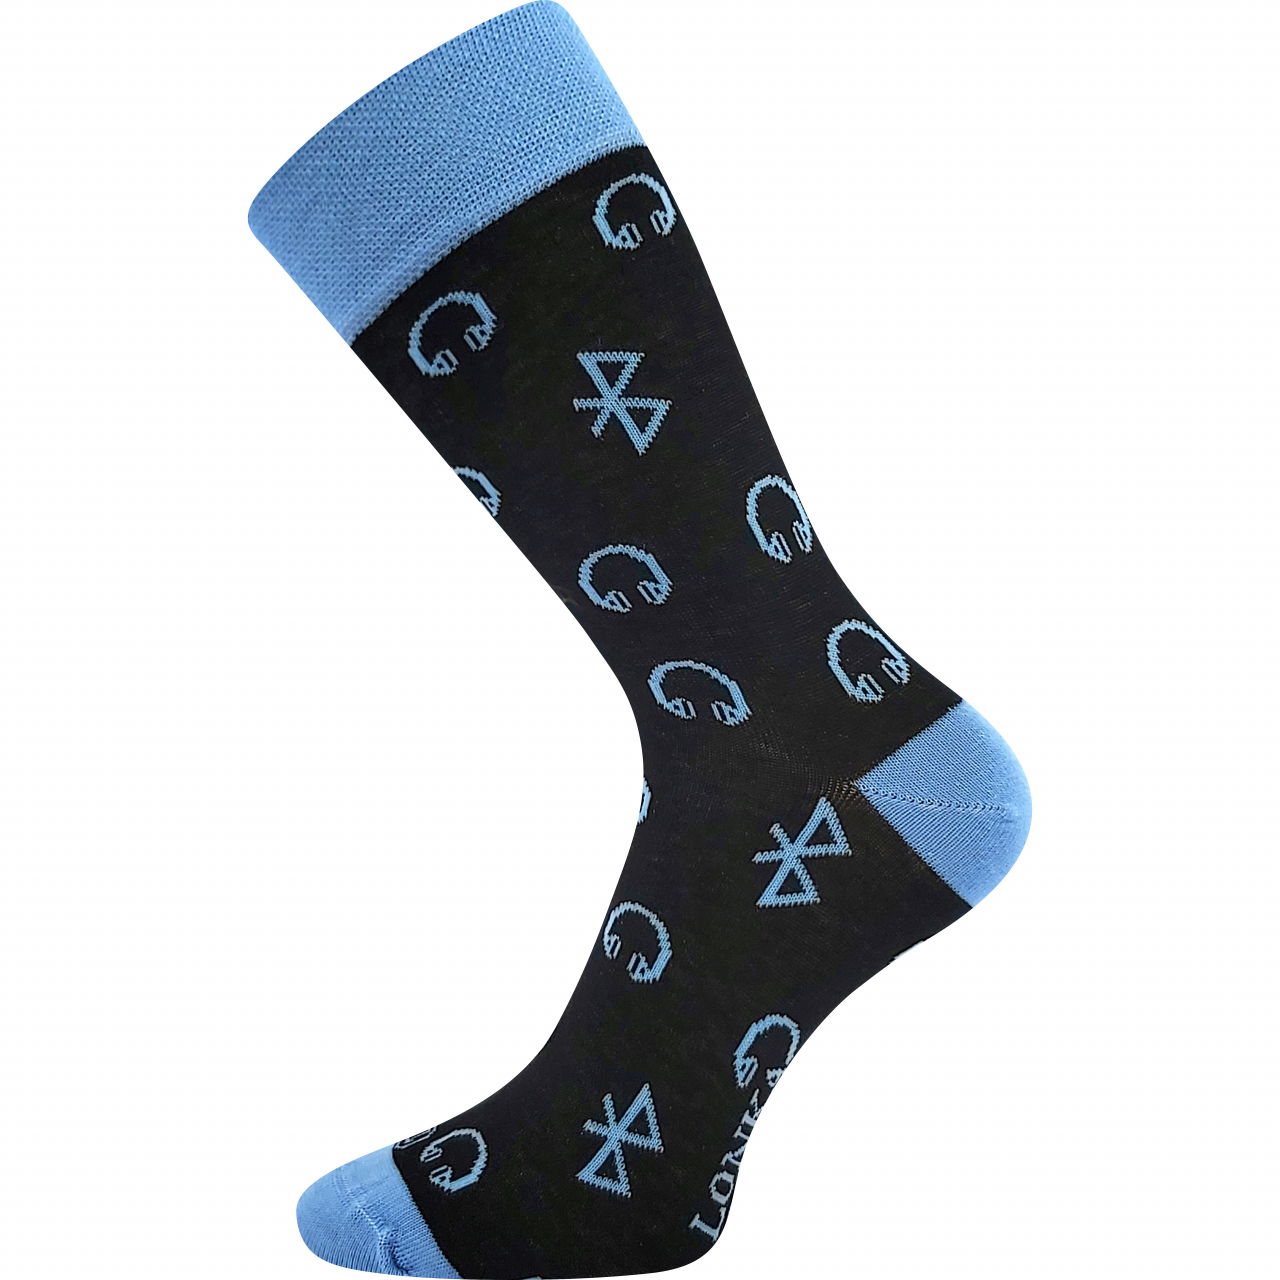 Ponožky trendy unisex Lonka Woodoo Bluetooth - černé-modré, 43-46